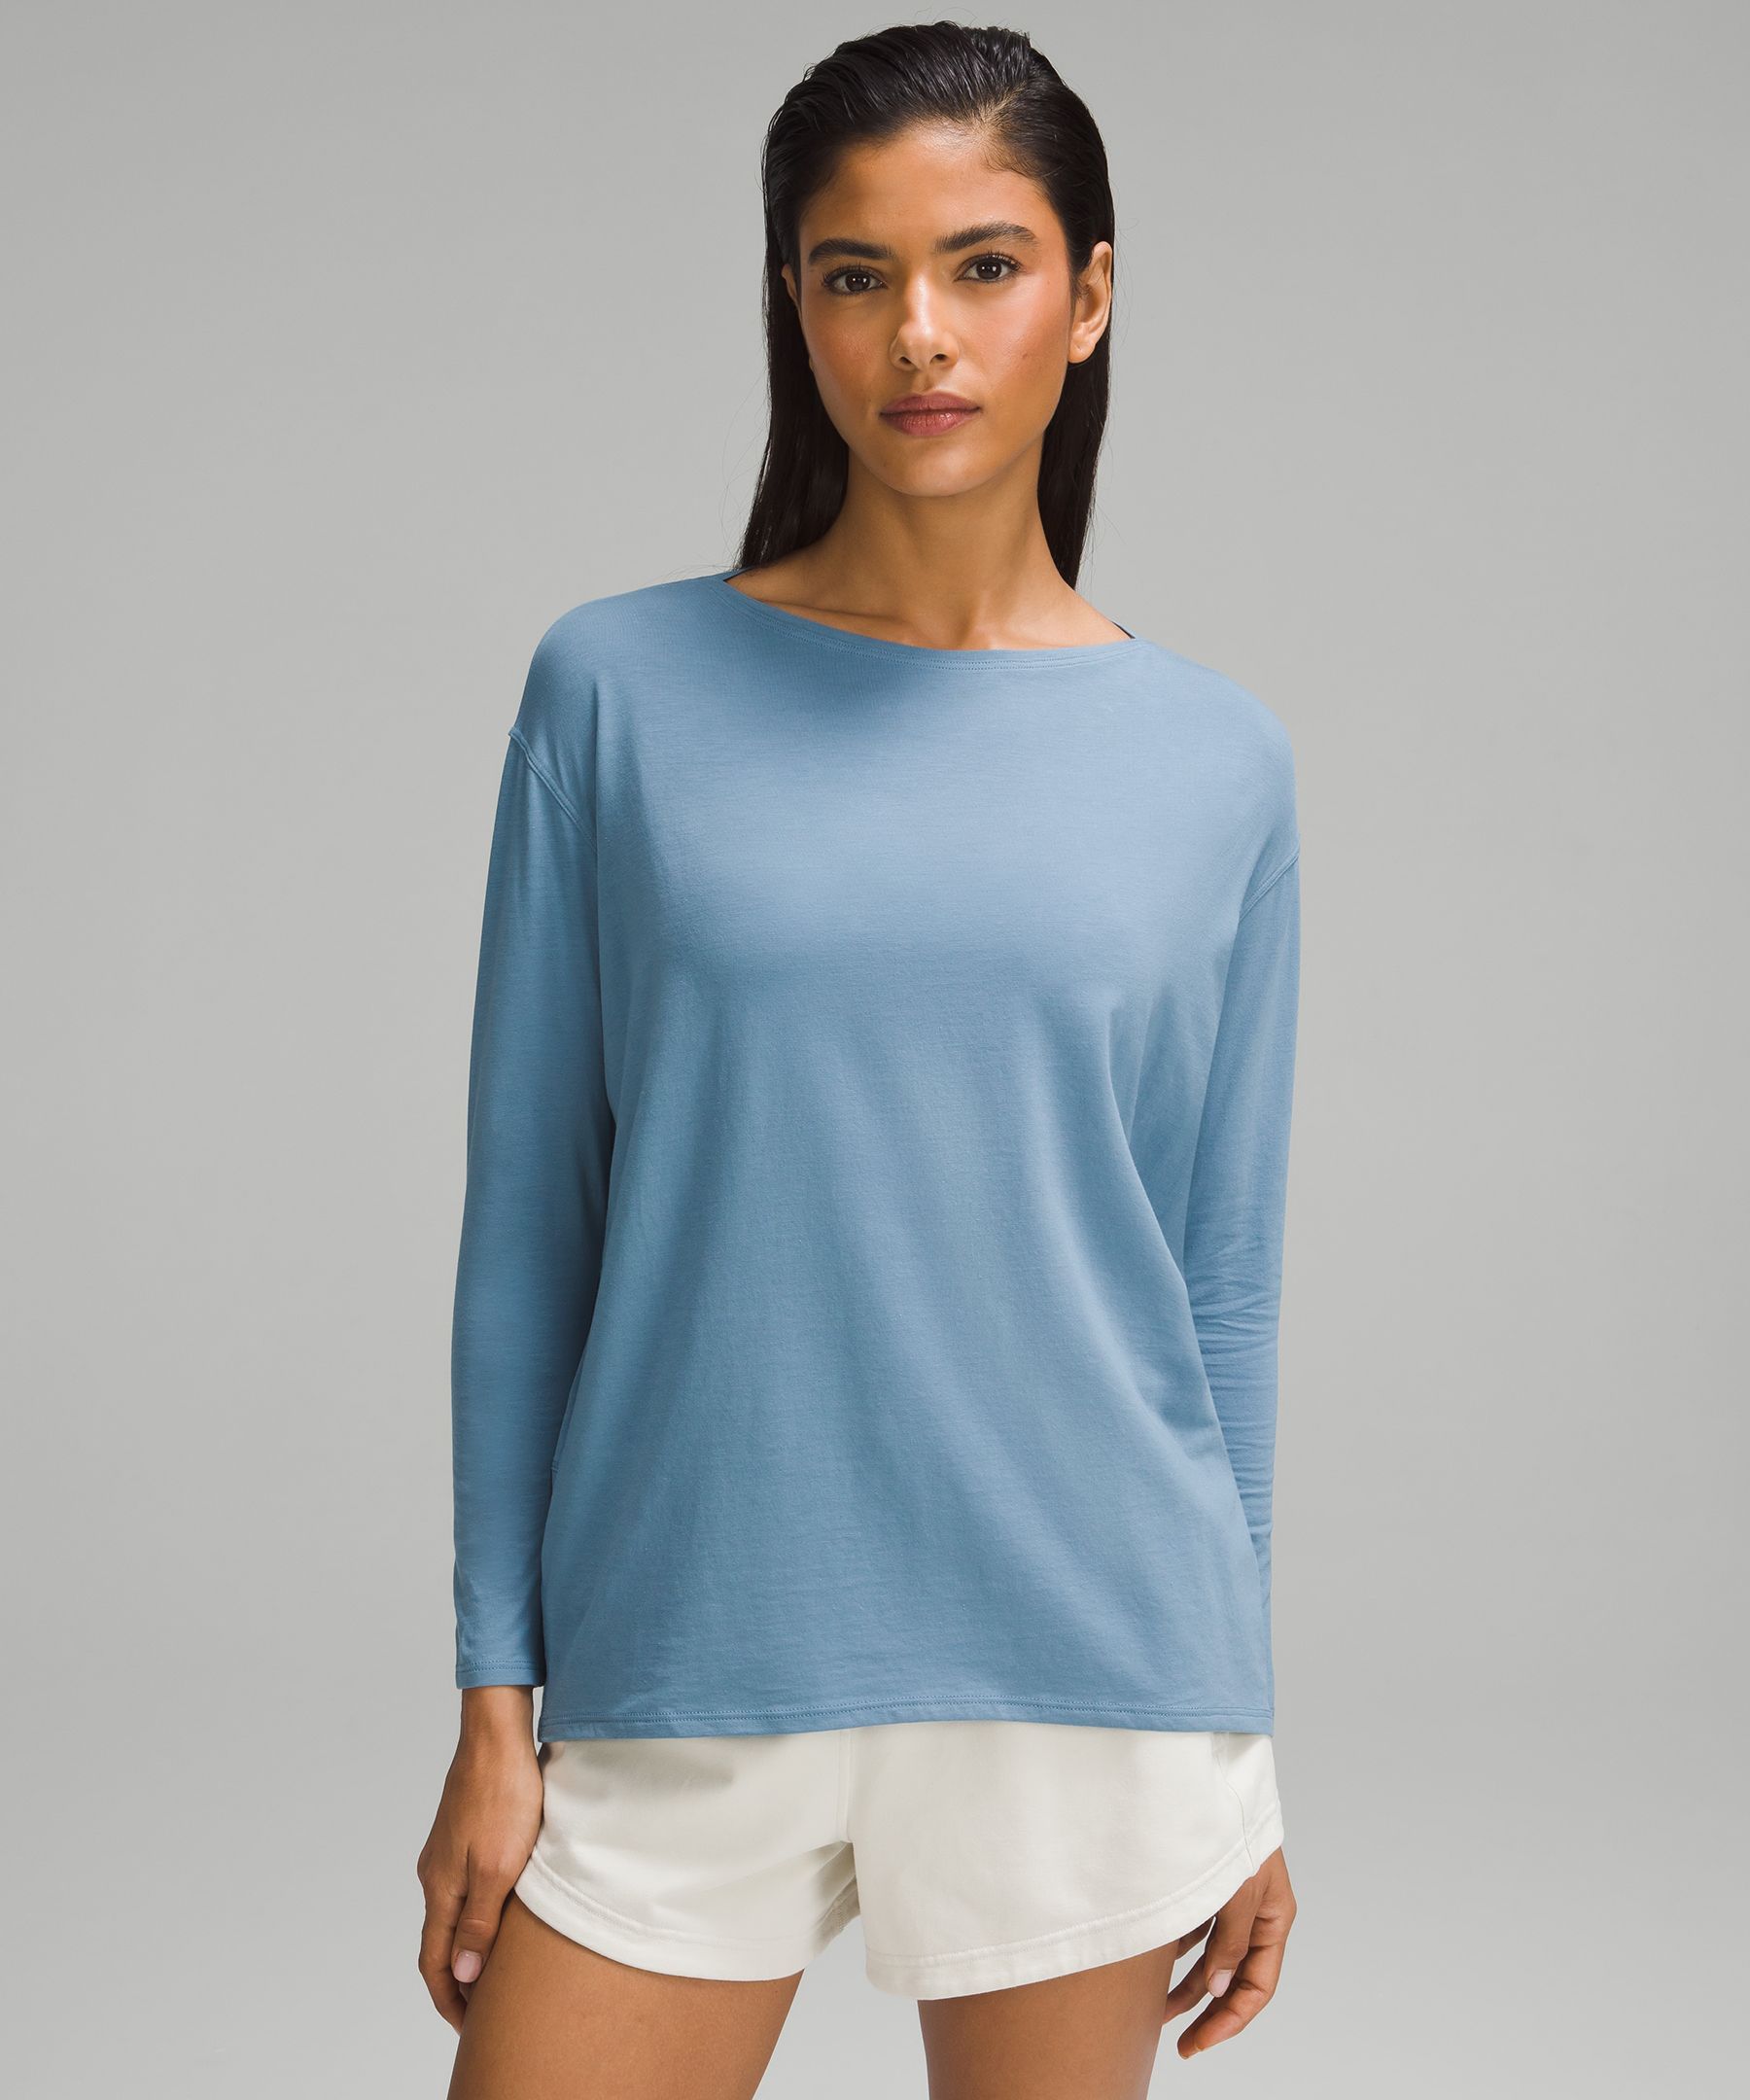 Love Long-Sleeve Shirt Women's Long Sleeve Shirts Lululemon, 44% OFF